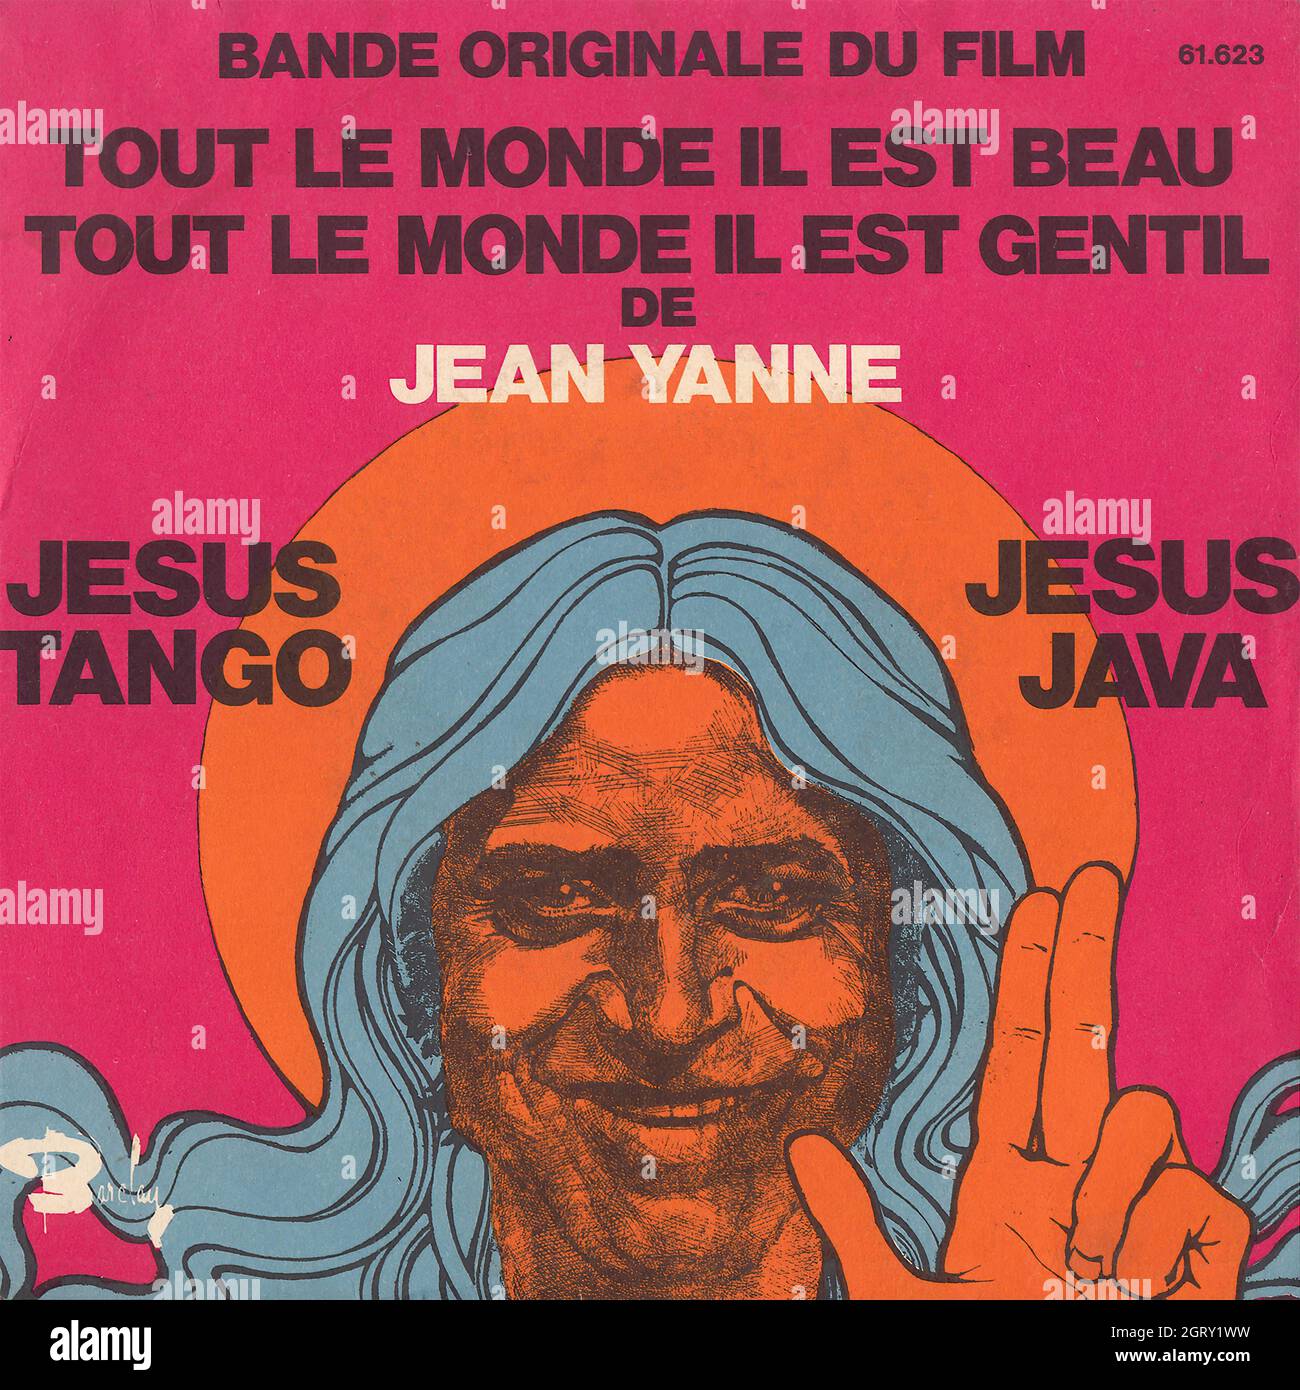 Michel Magne - Jean Yanne - Jesus Tango - Jesus Java 45rpm - Vintage Vinyl Record Cover Stock Photo